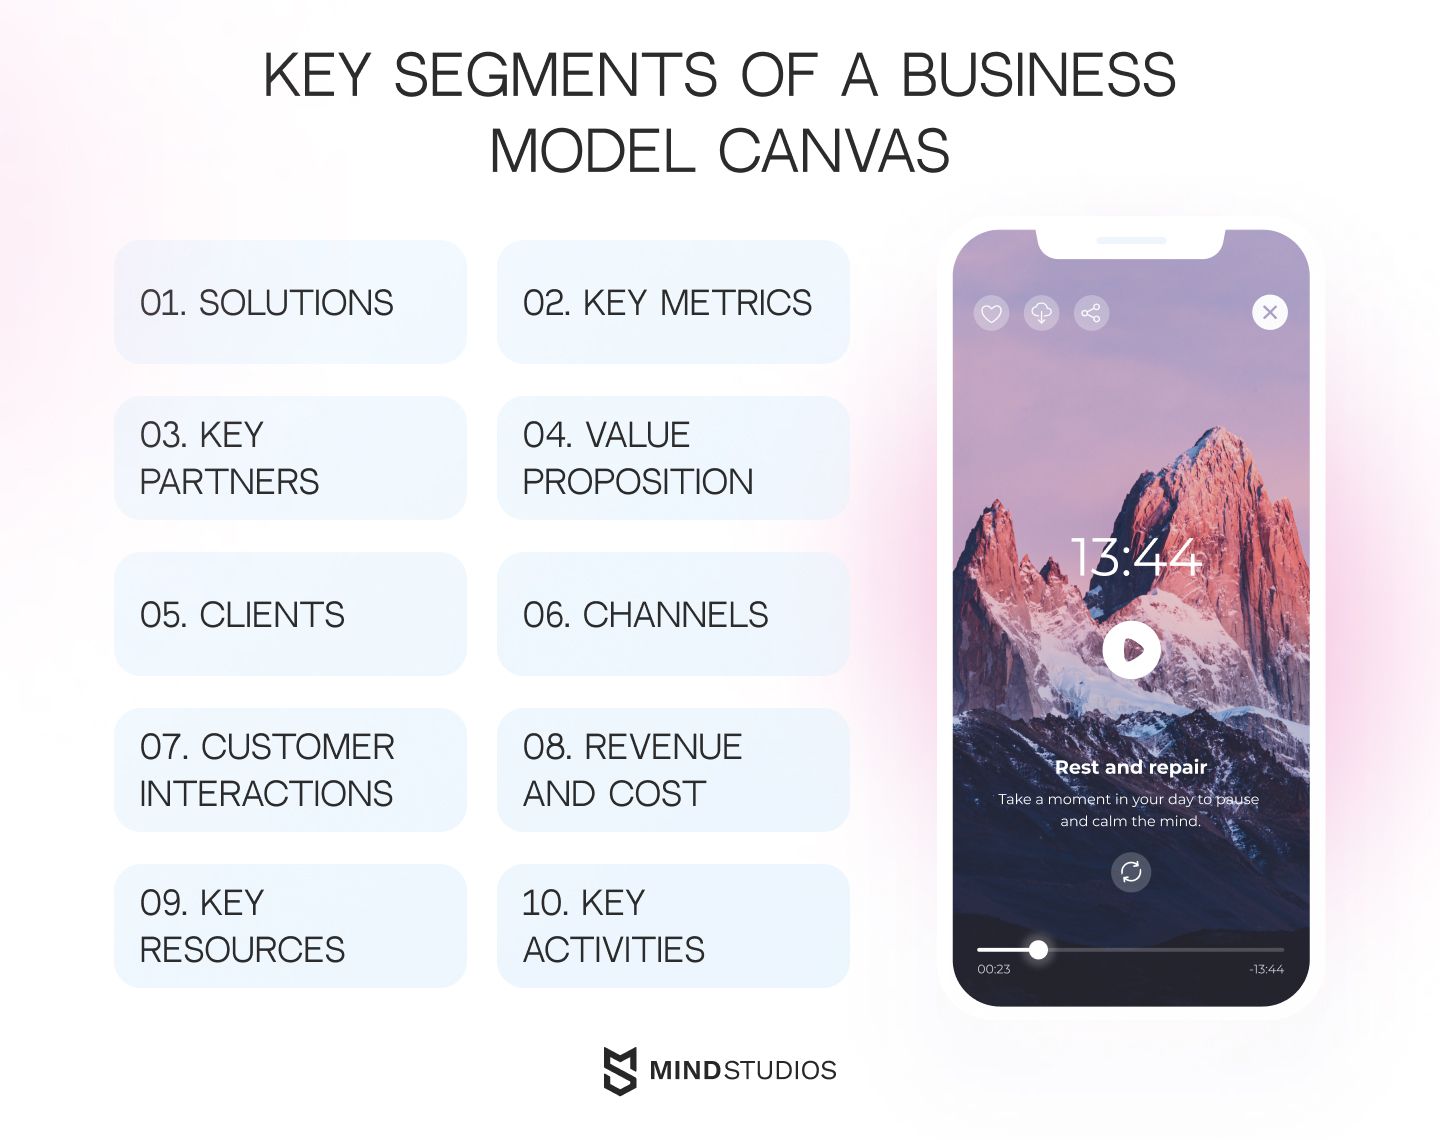 Key segments of a business model canvas